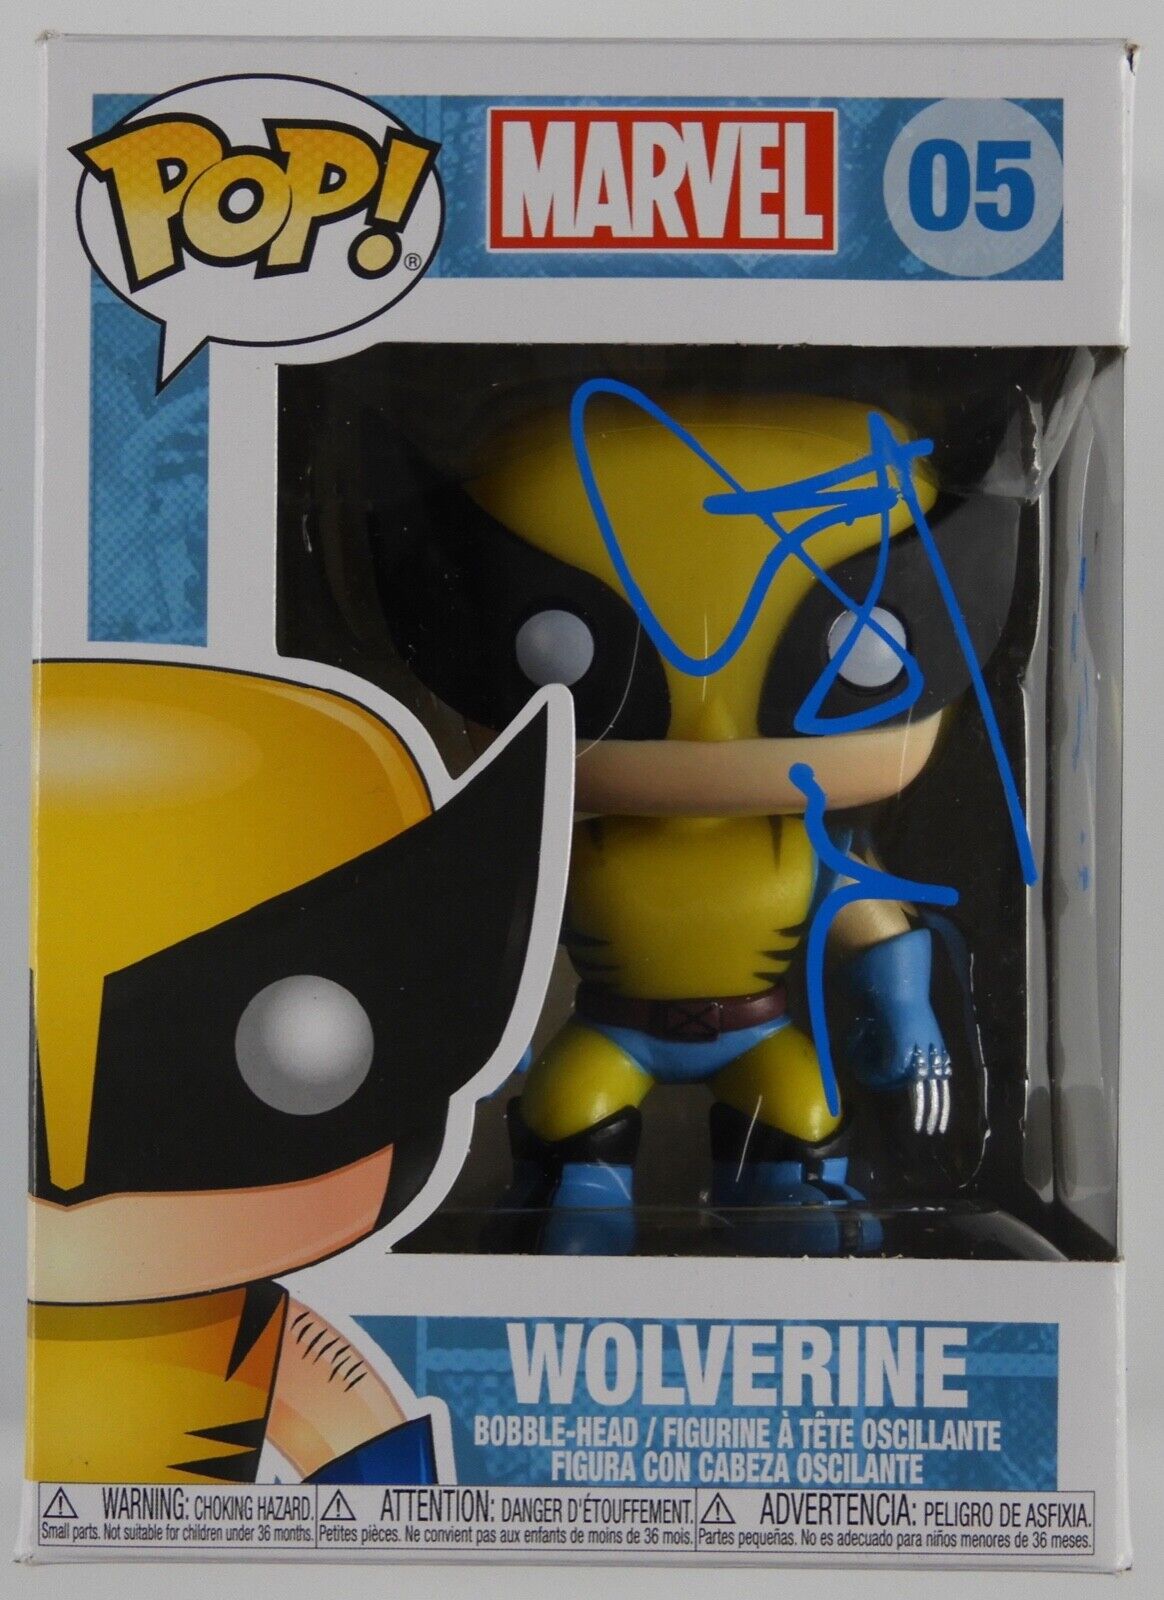 Hugh Jackman Signed Autograph Funko Pop 05 JSA X-Men Wolverine